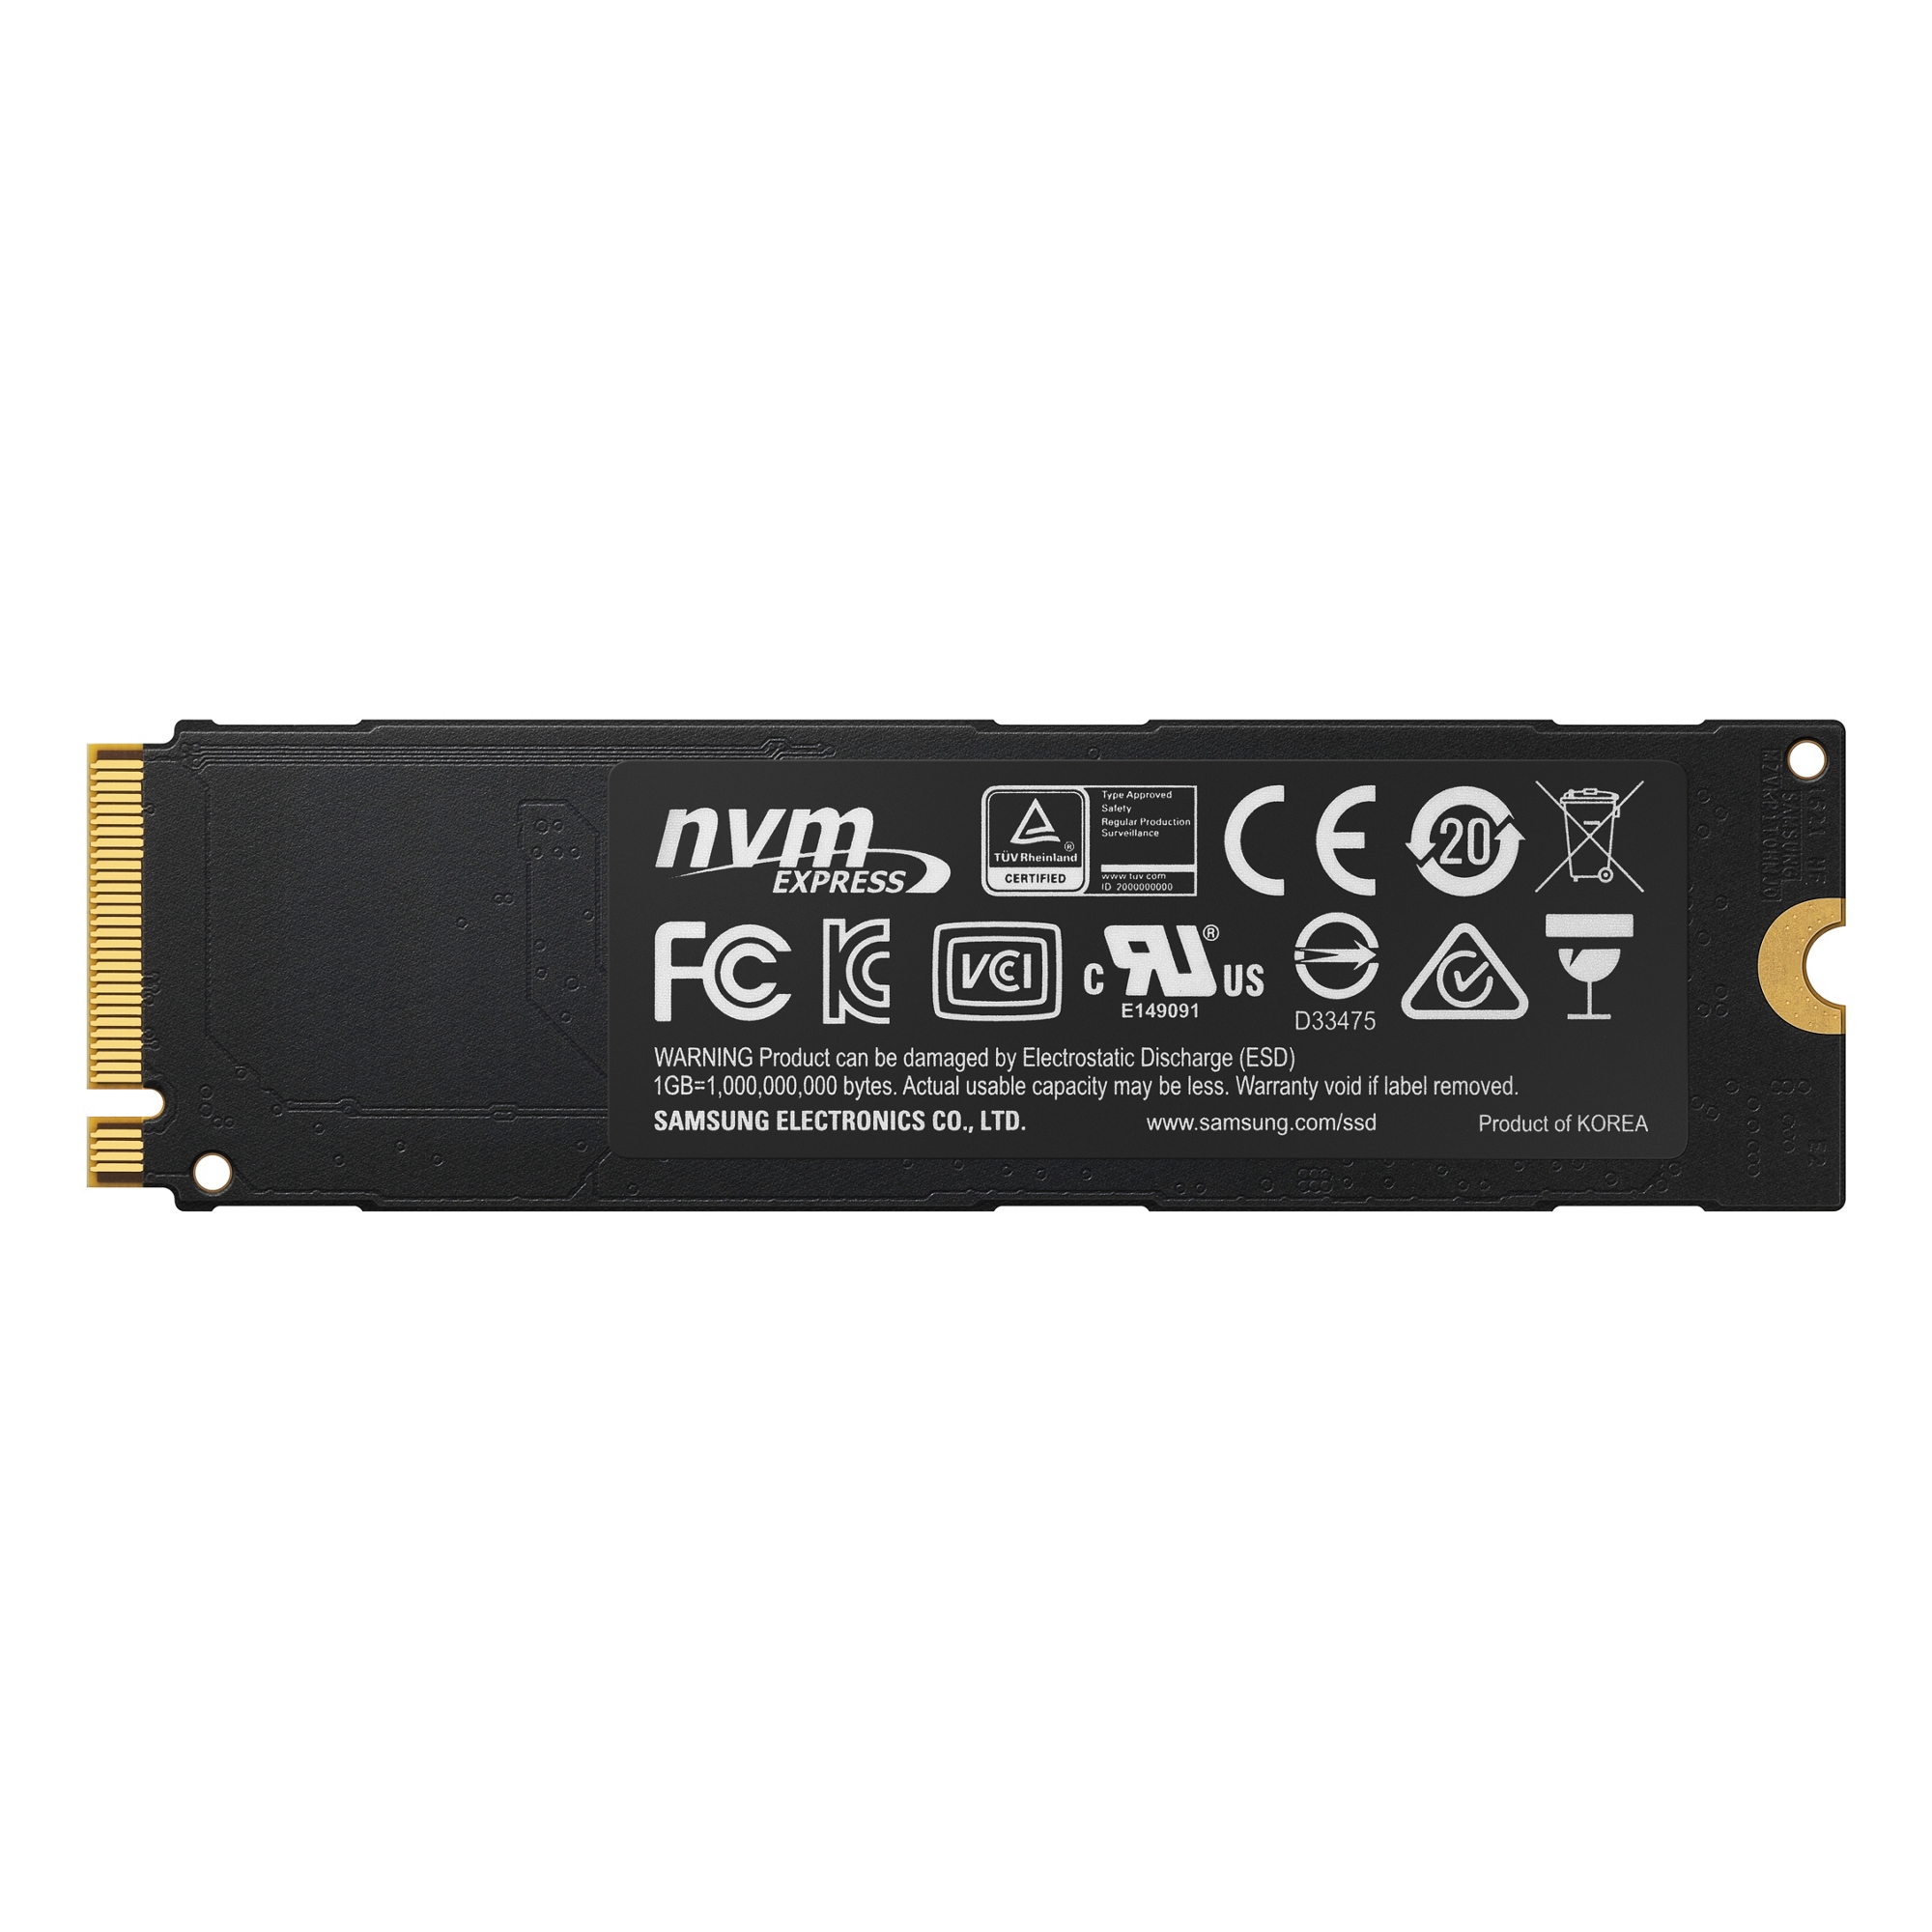 Samsung SSD960 PRO 2TB M.2 PCIe NVMe SSD Review